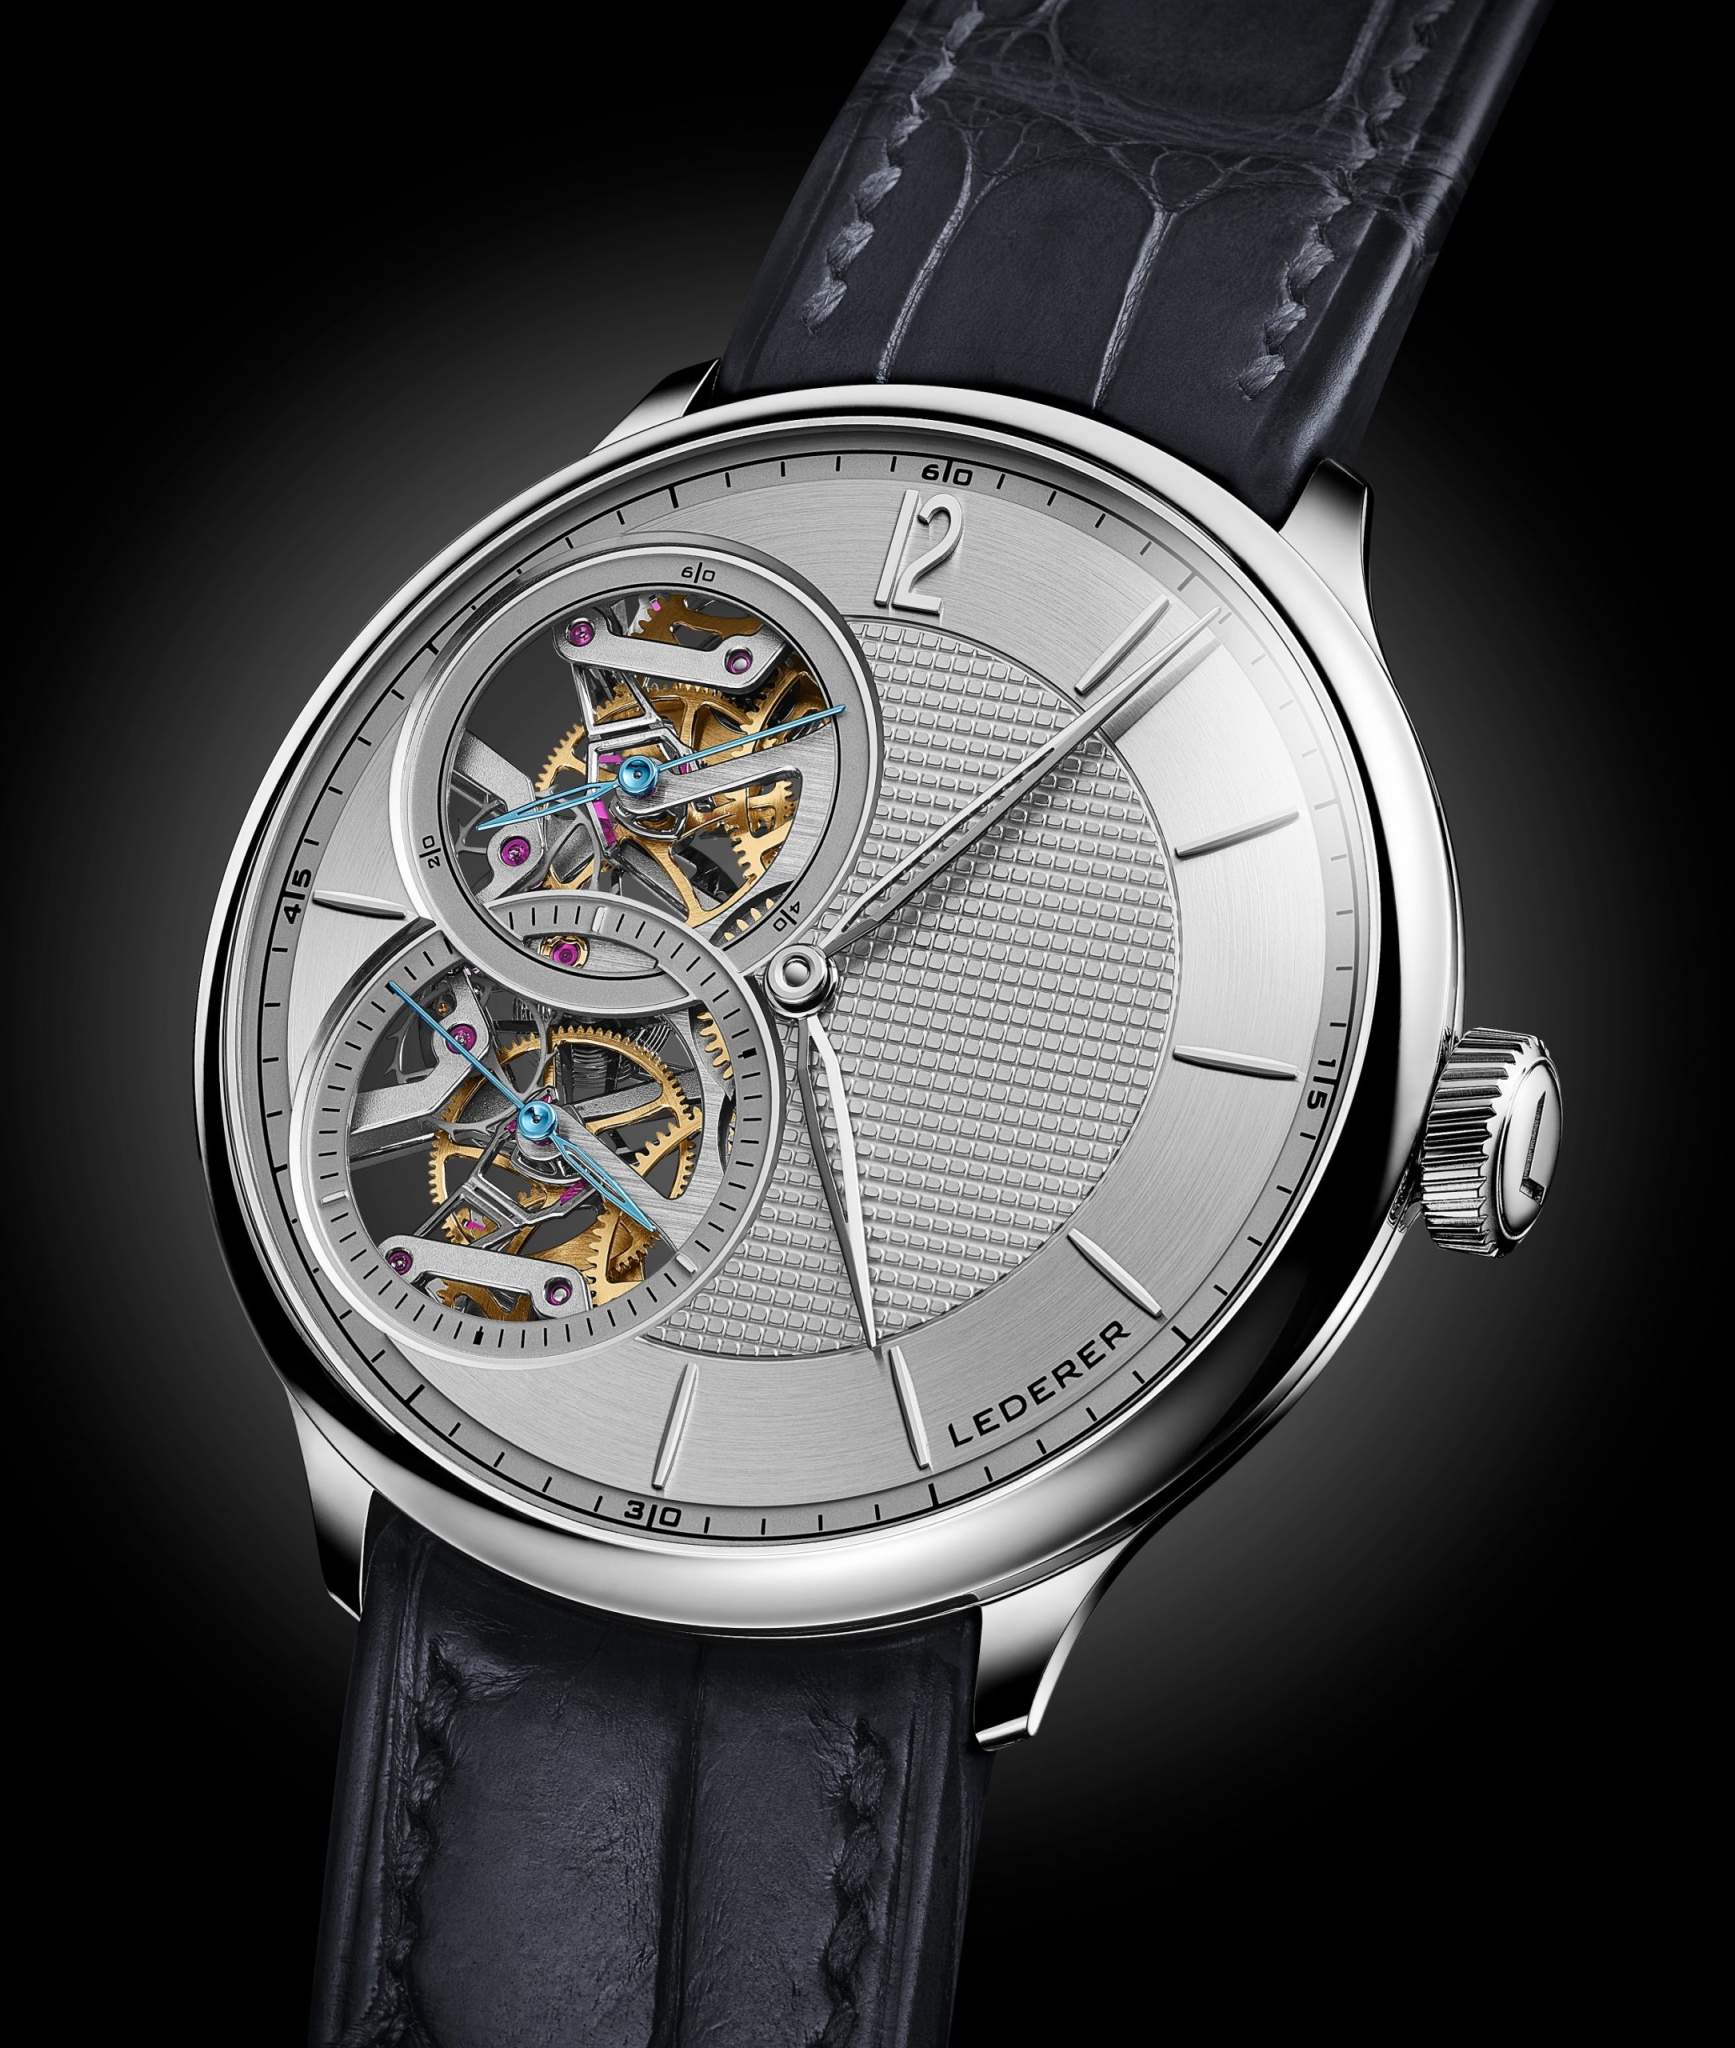 Bernhard Lederer, Central Impulse Chronometer, winning watch of the Innovation Prize 2021